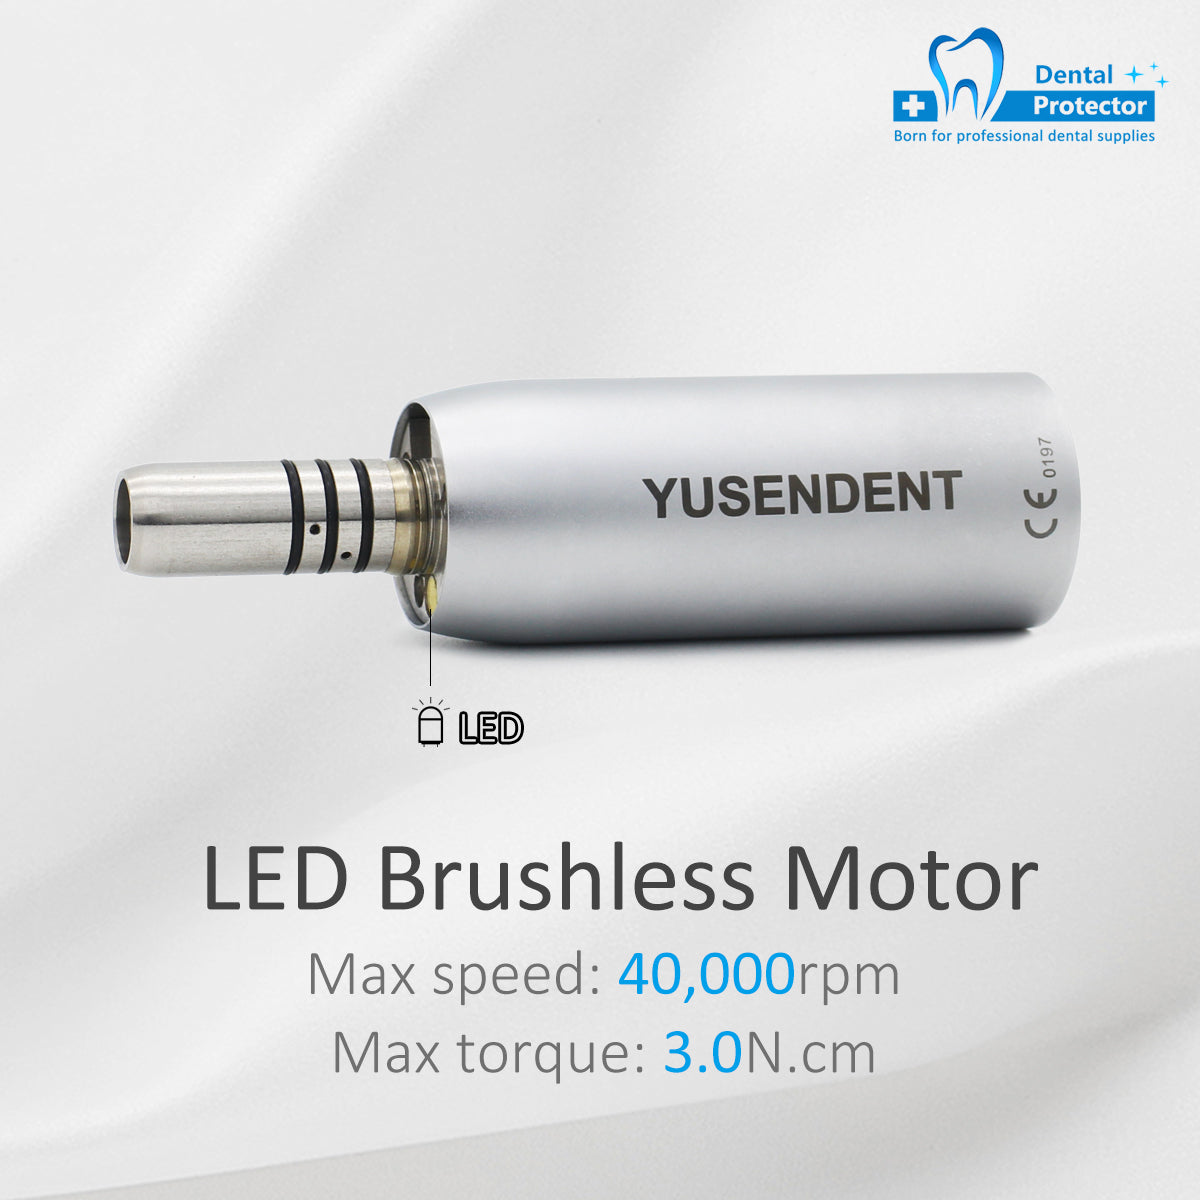 COXO Yusen dent C-Puma int+ Dental Electric Motor Brushless Motor Micro Motor&Control Box